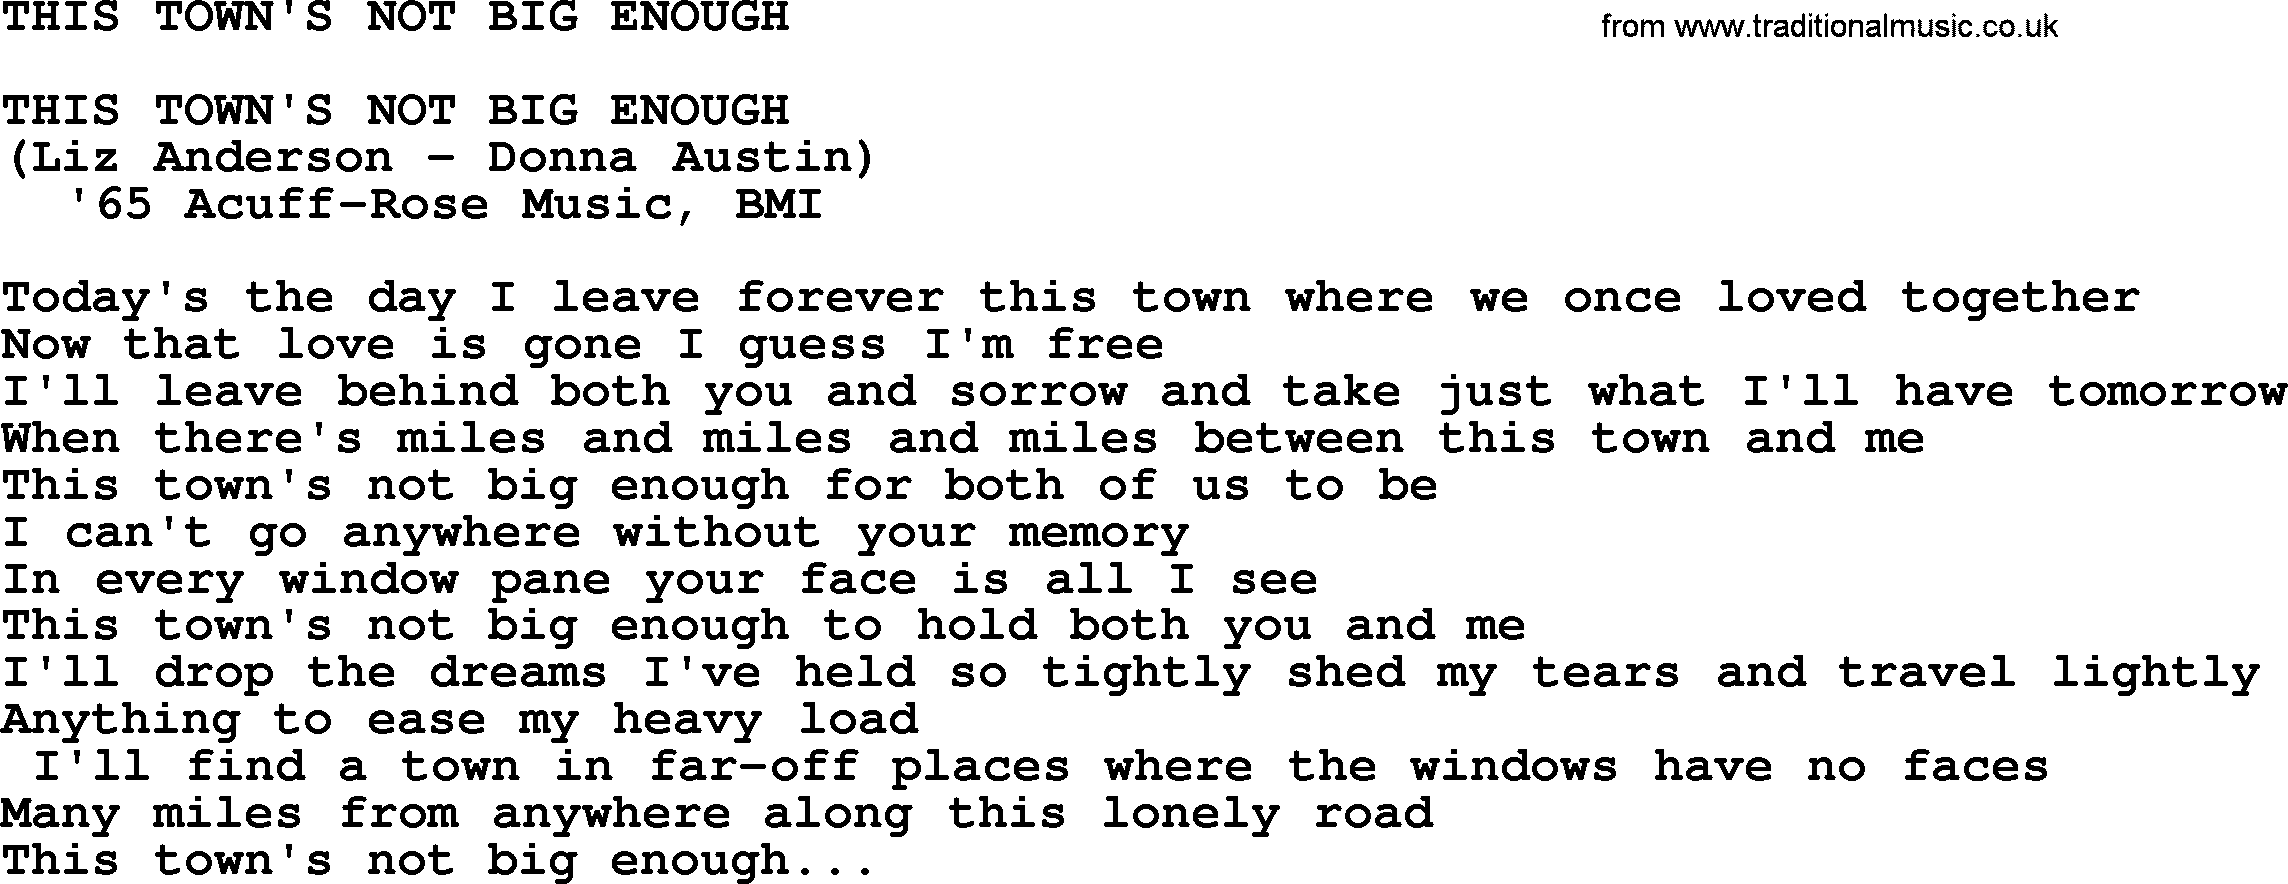 Merle Haggard song: This Town's Not Big Enough, lyrics.